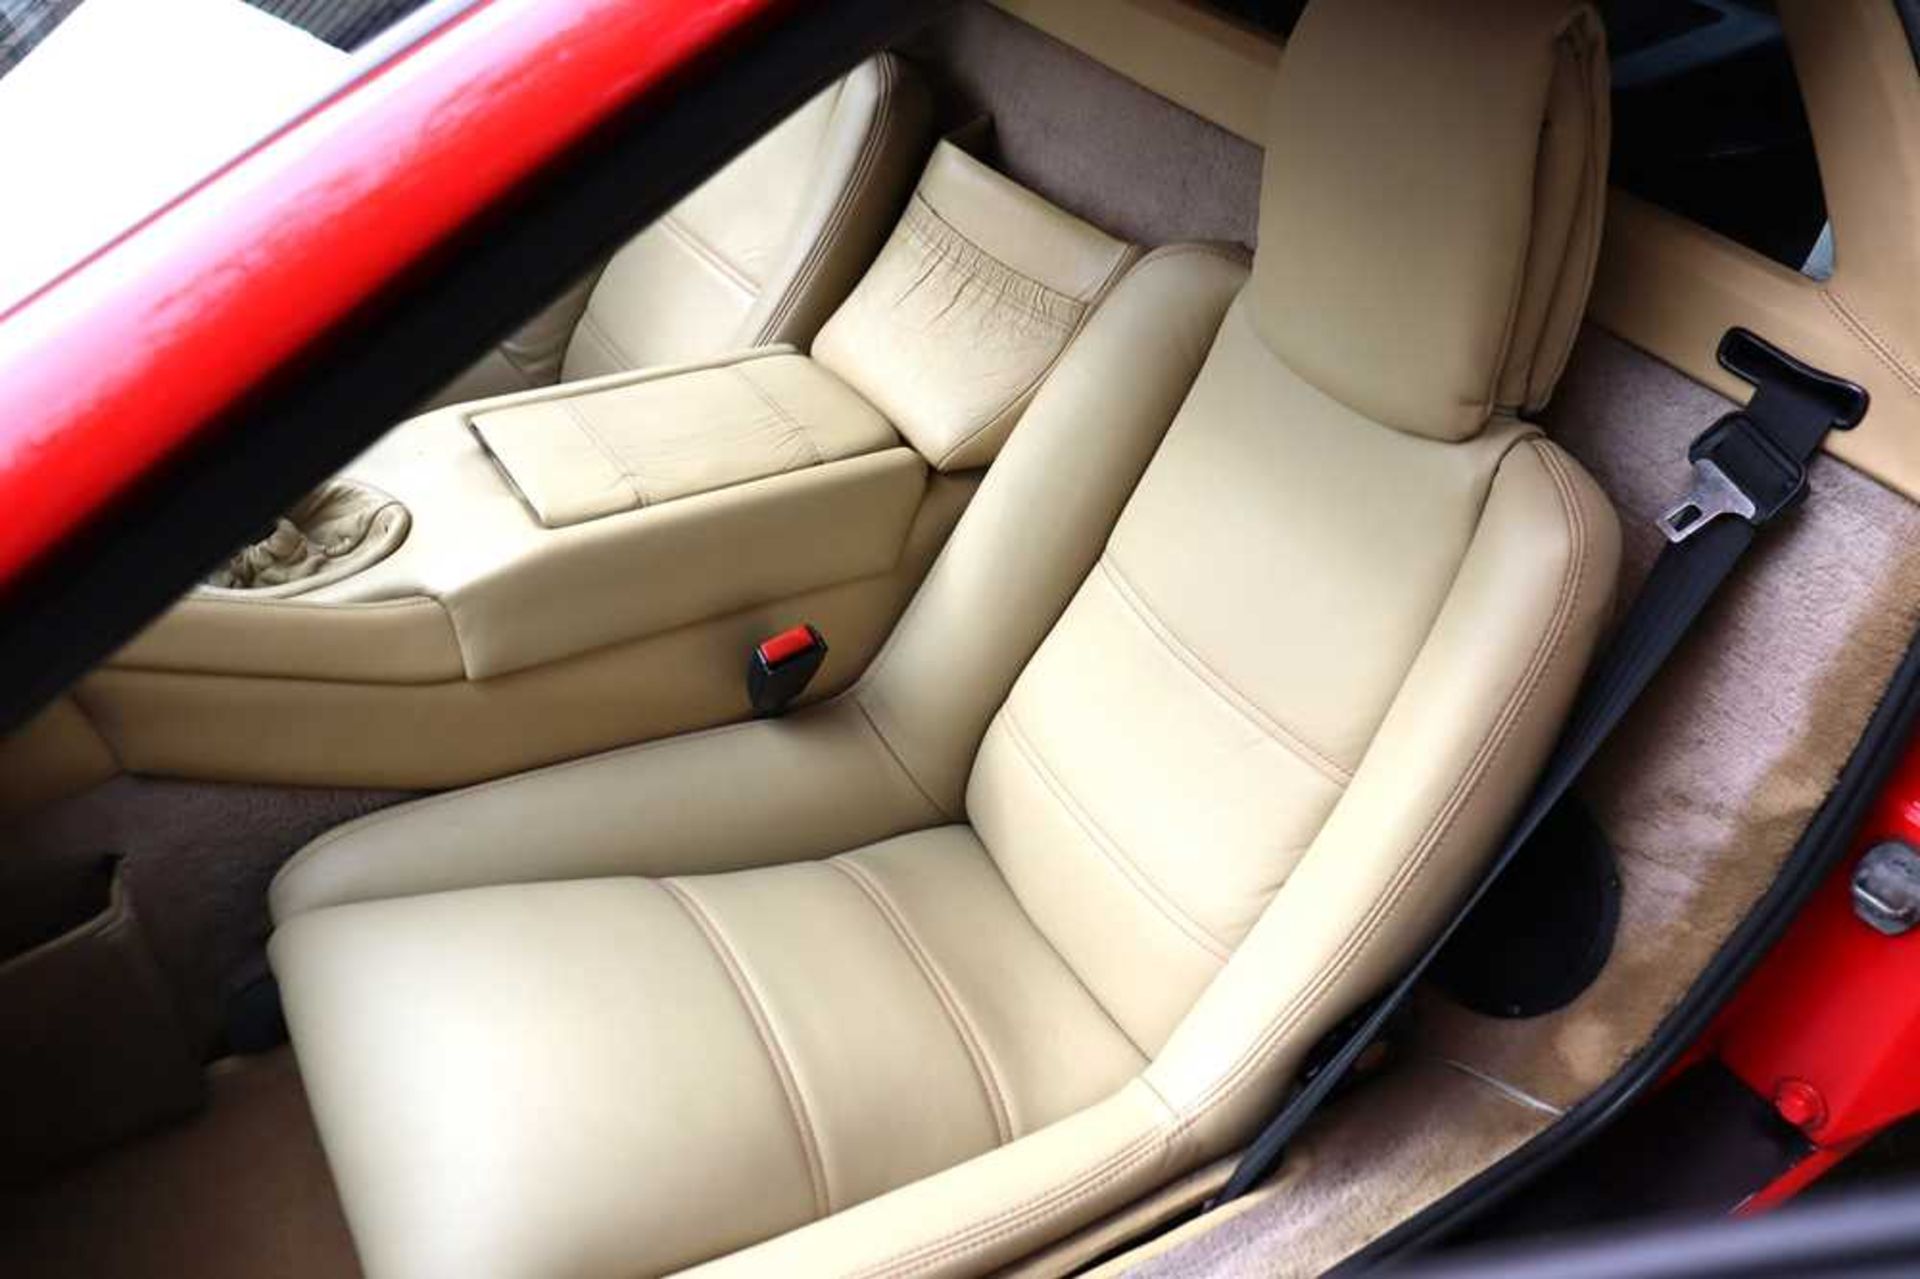 1989 Lotus Esprit Turbo Just 37,000 recorded miles - Image 49 of 72